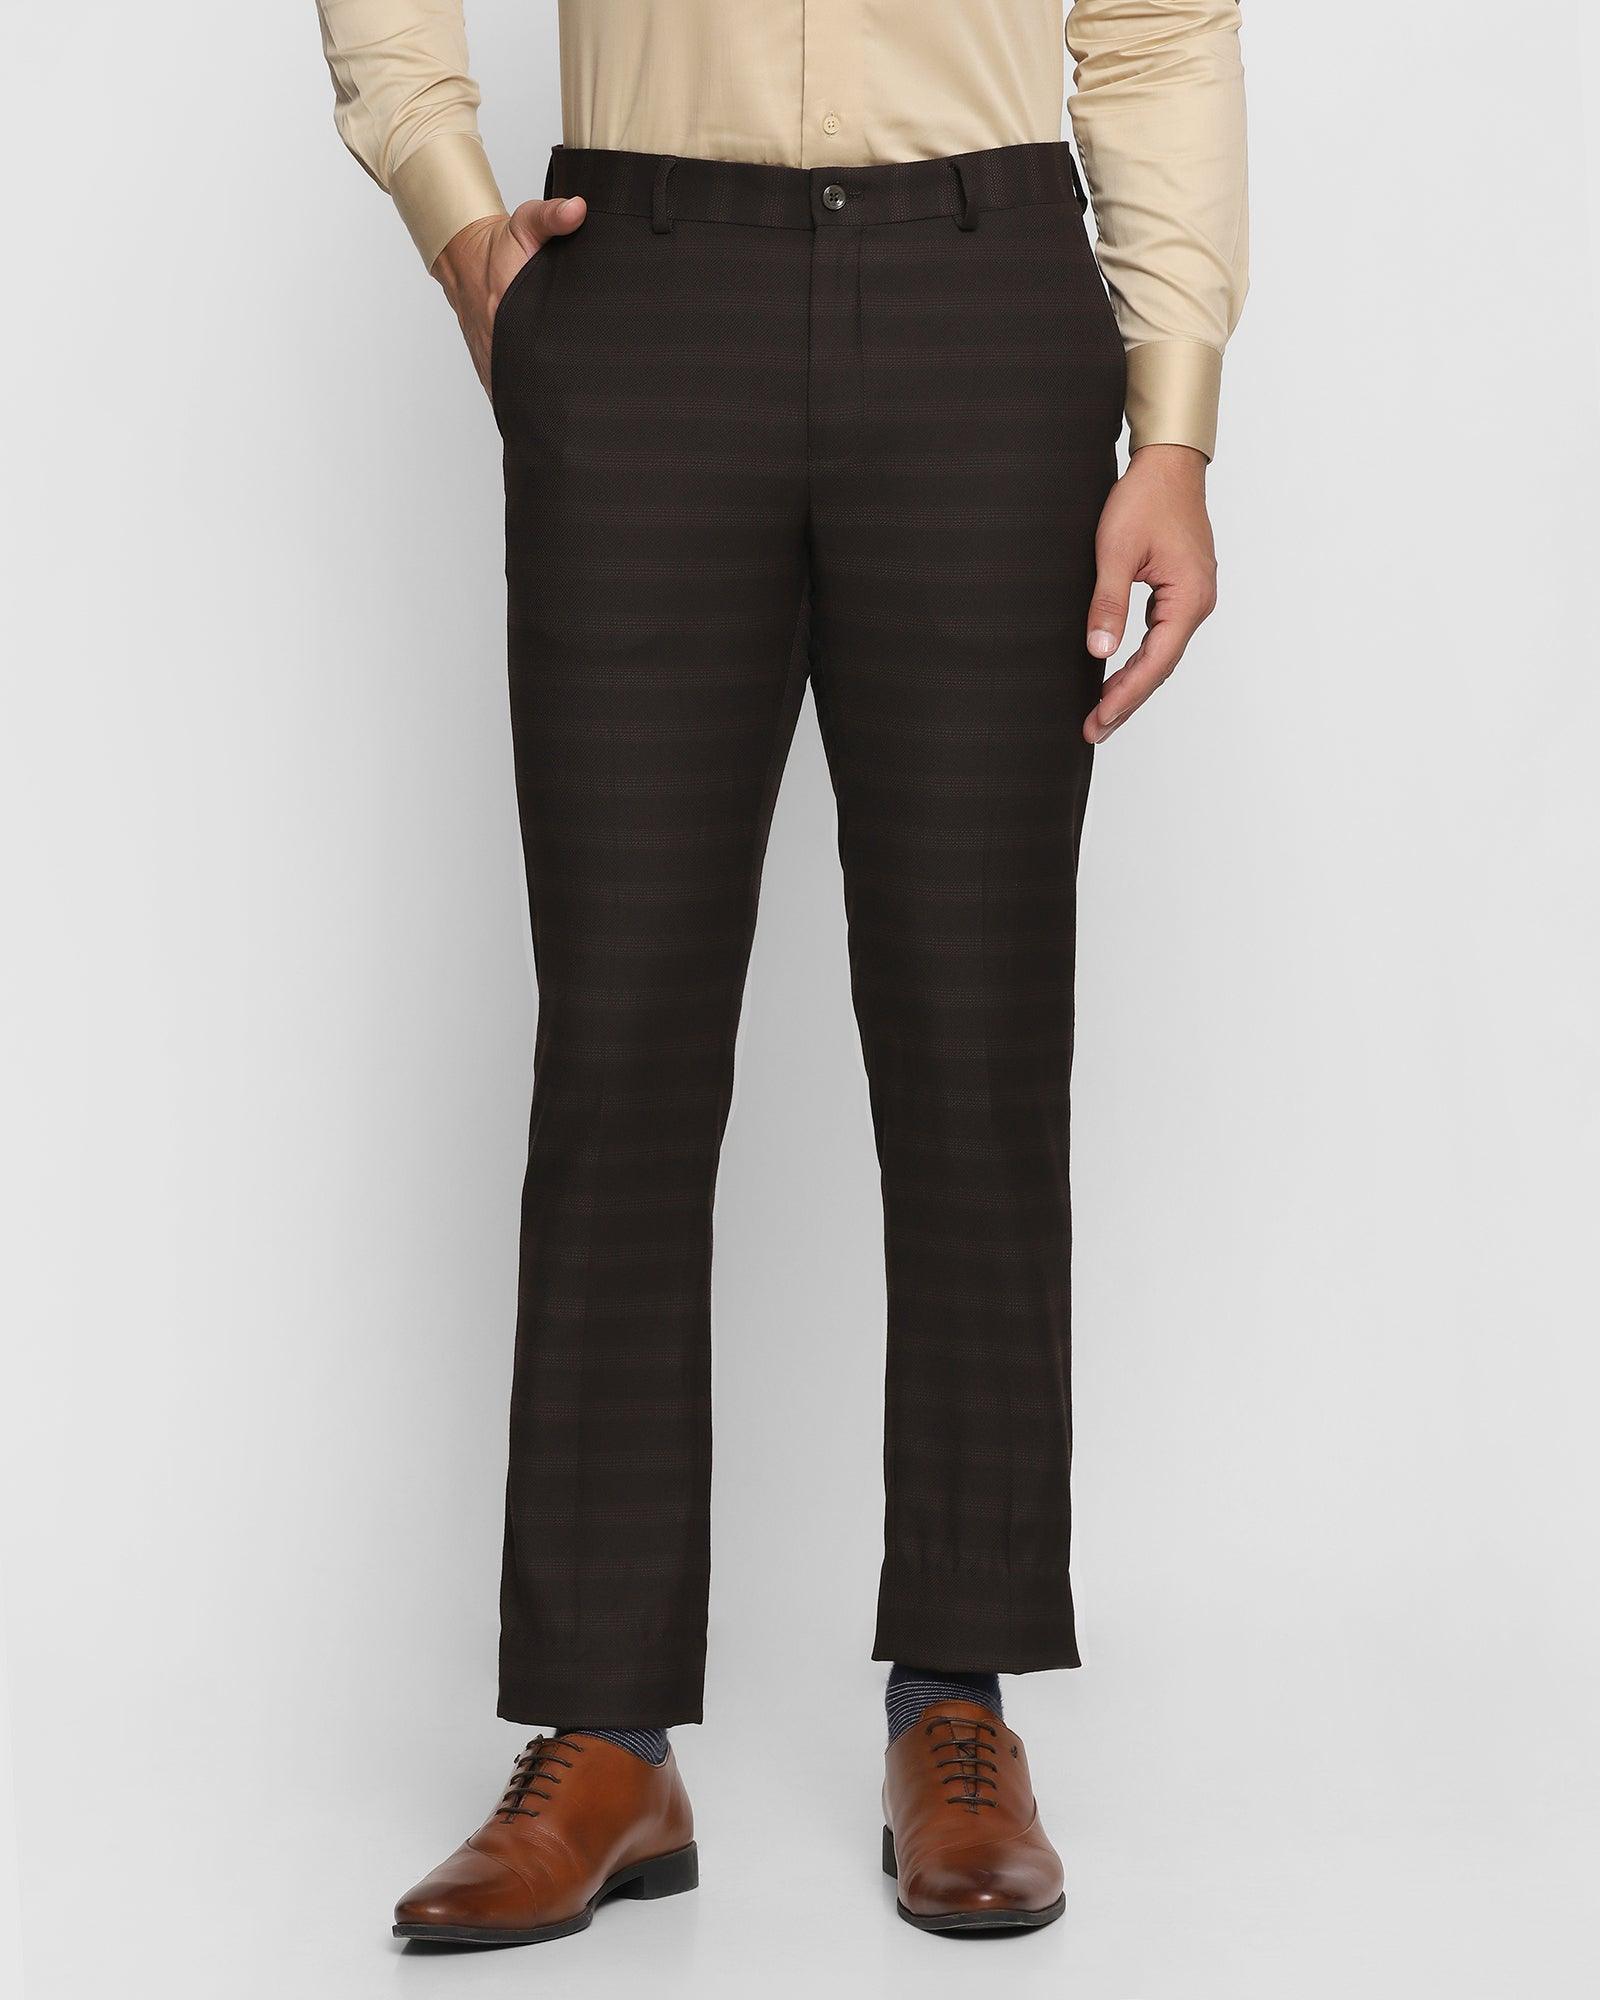 Slim Fit B-91 Formal Brown Striped Trouser - Modek